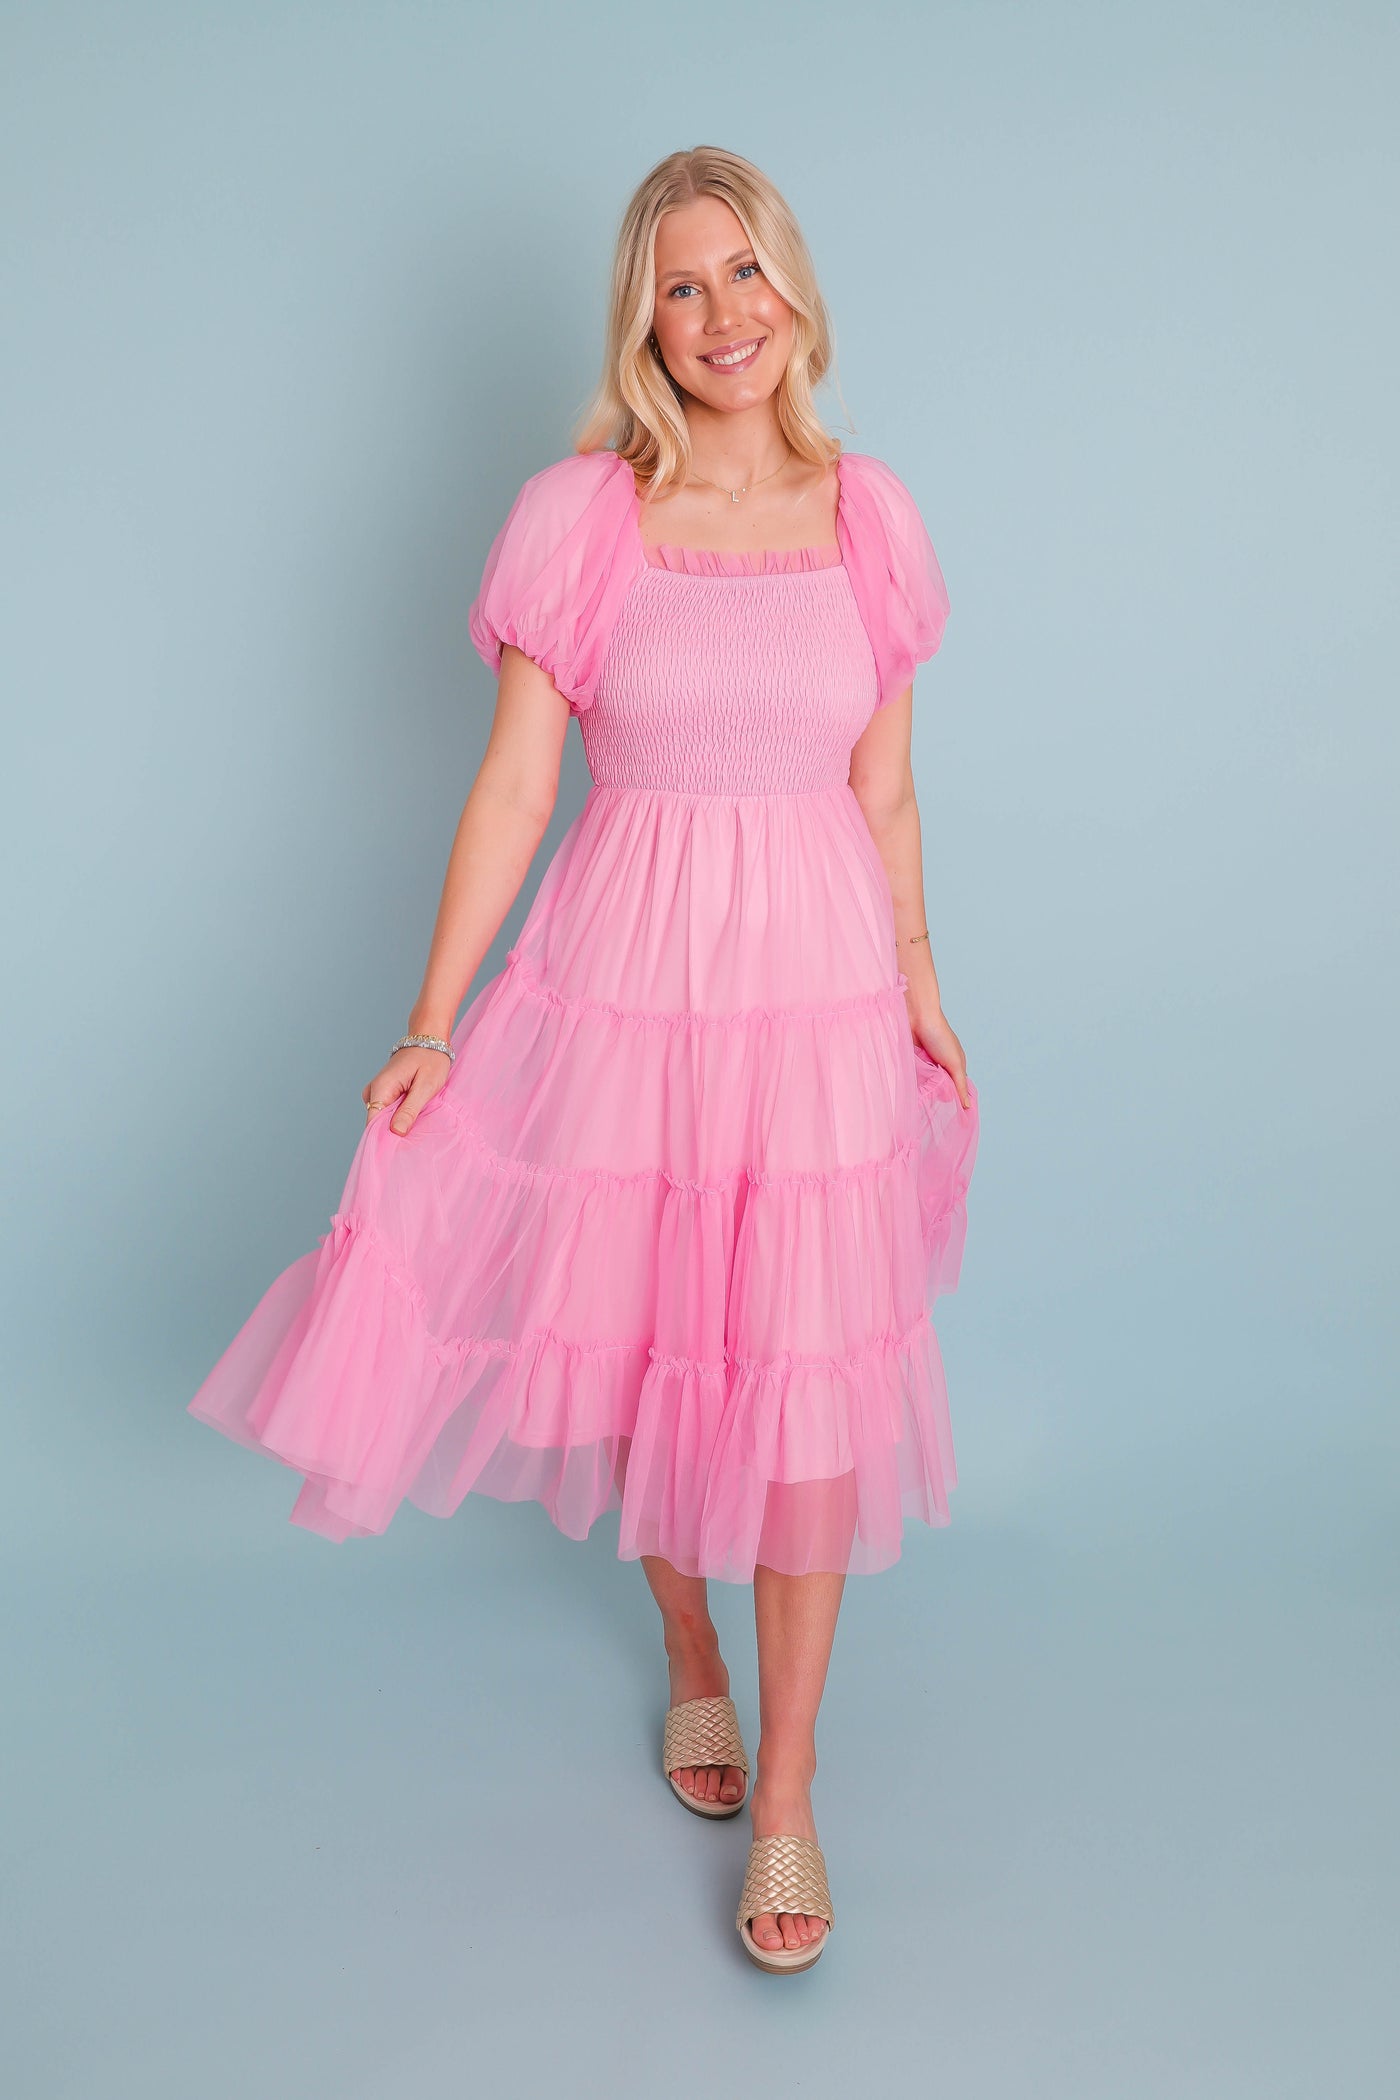 Women's Pretty Pink Tulle Dress- Women's Tulle Long Dress- Tulle Long Photoshoot Dress